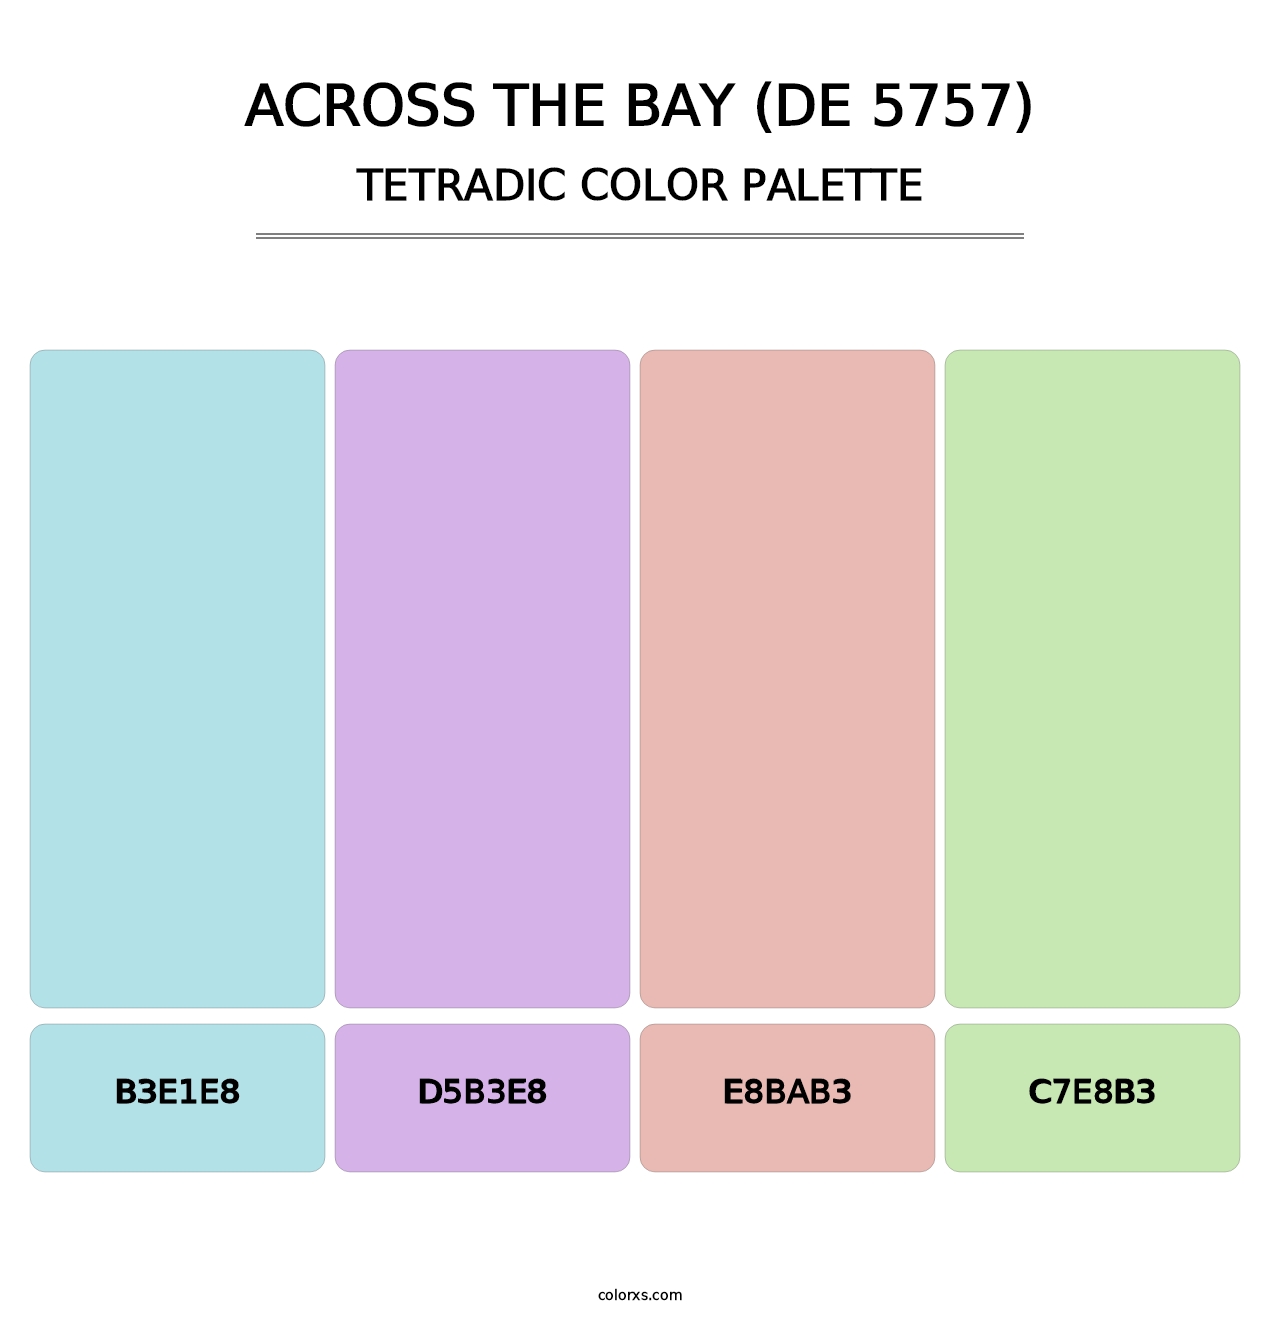 Across the Bay (DE 5757) - Tetradic Color Palette